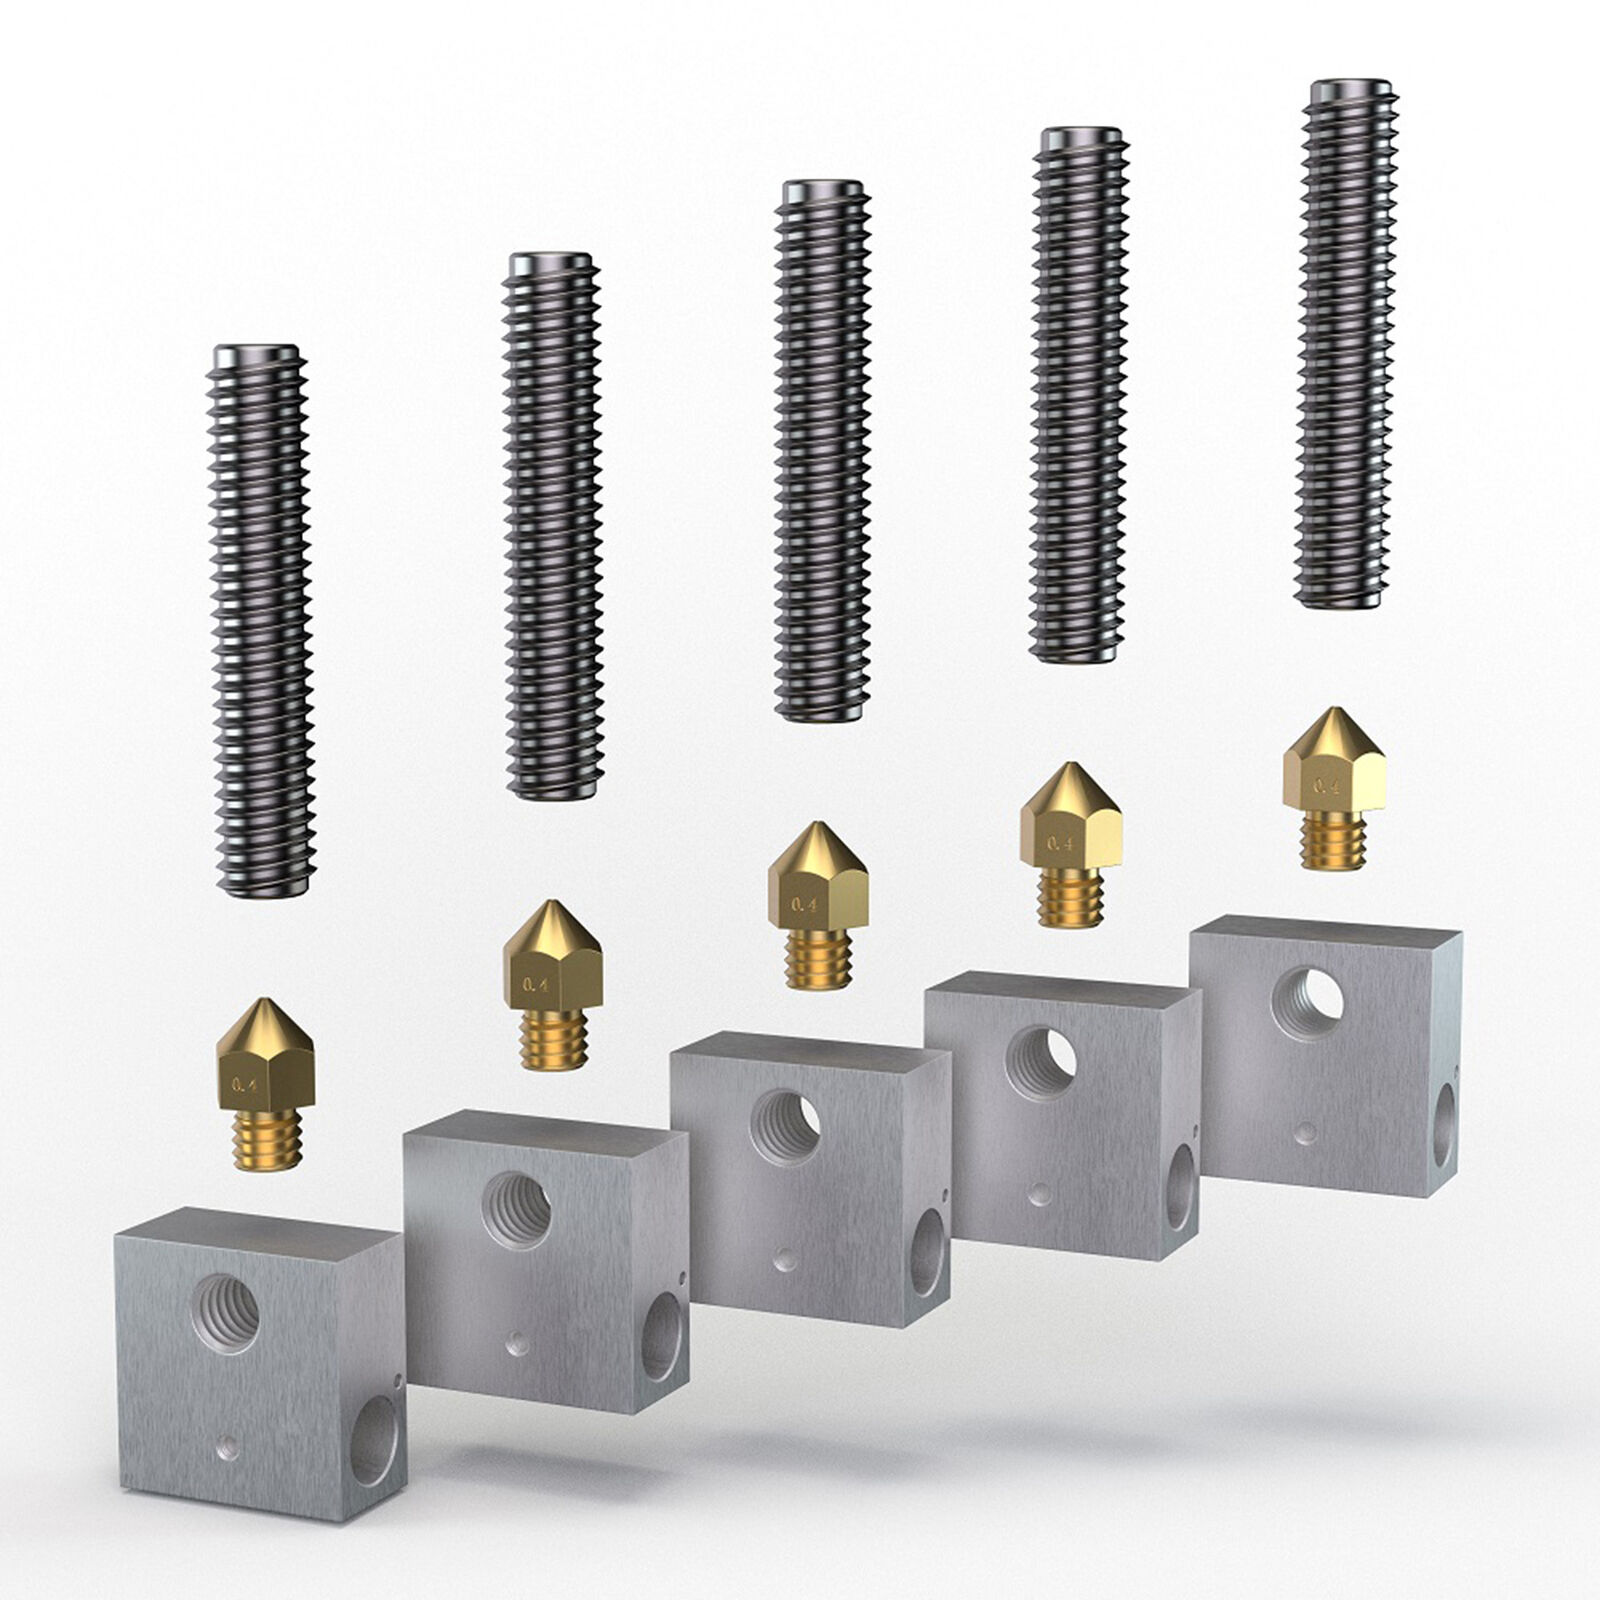 Anet 5Pcs/Pack 0.4mm Brass Nozzle Extruder Print Head + Heater Block D3G0